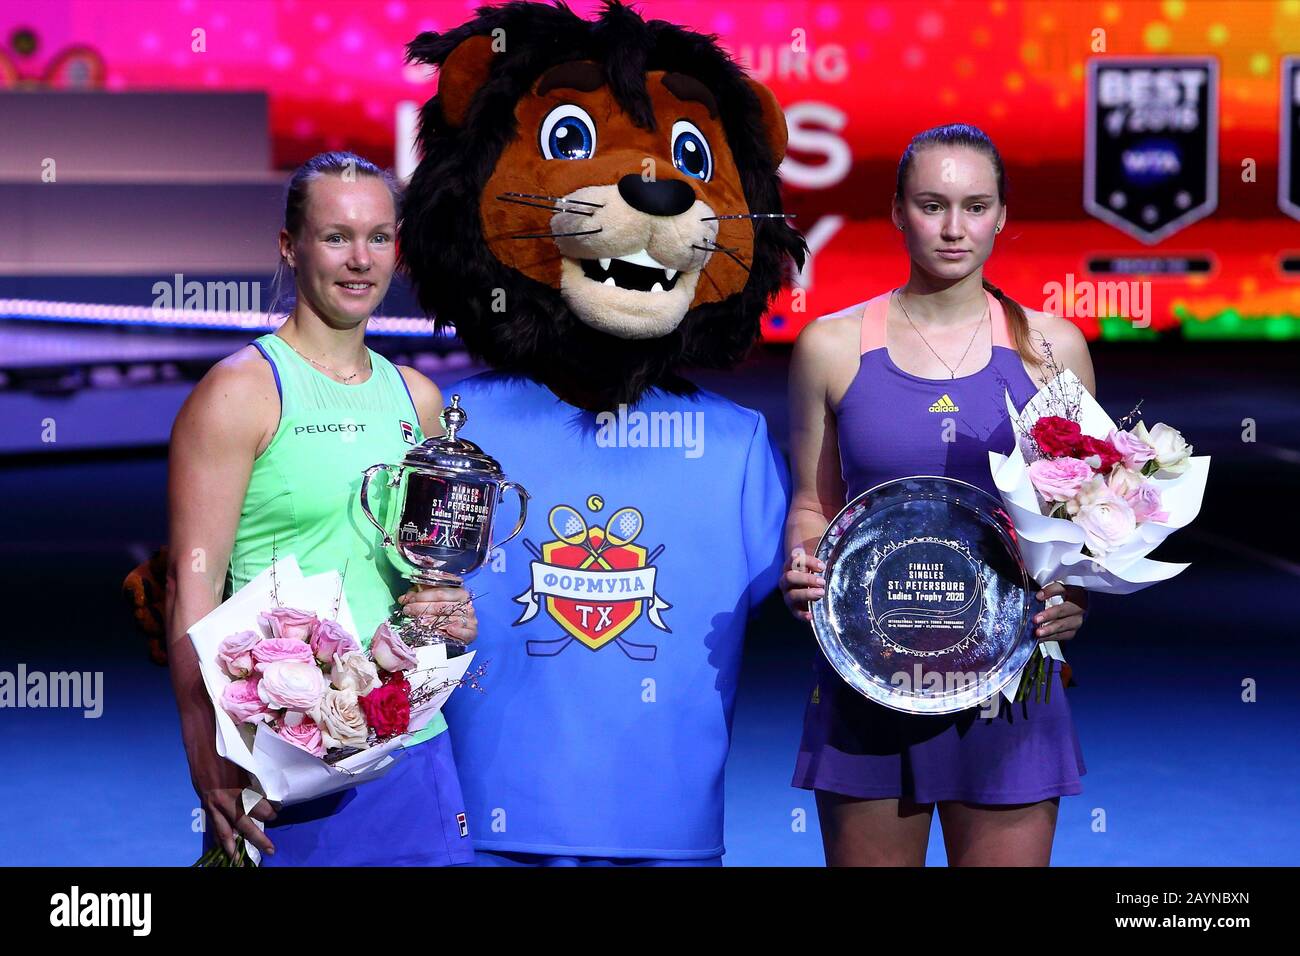 russian-federation-saint-petersburg-tennis-womens-singles-final-match-at-the-stpetersburg-ladies-trophy-2020-elena-rybakina-v-kiki-bertens-tennis-players-elena-rybakina-and-kiki-bertens-2AYNBXN.jpg